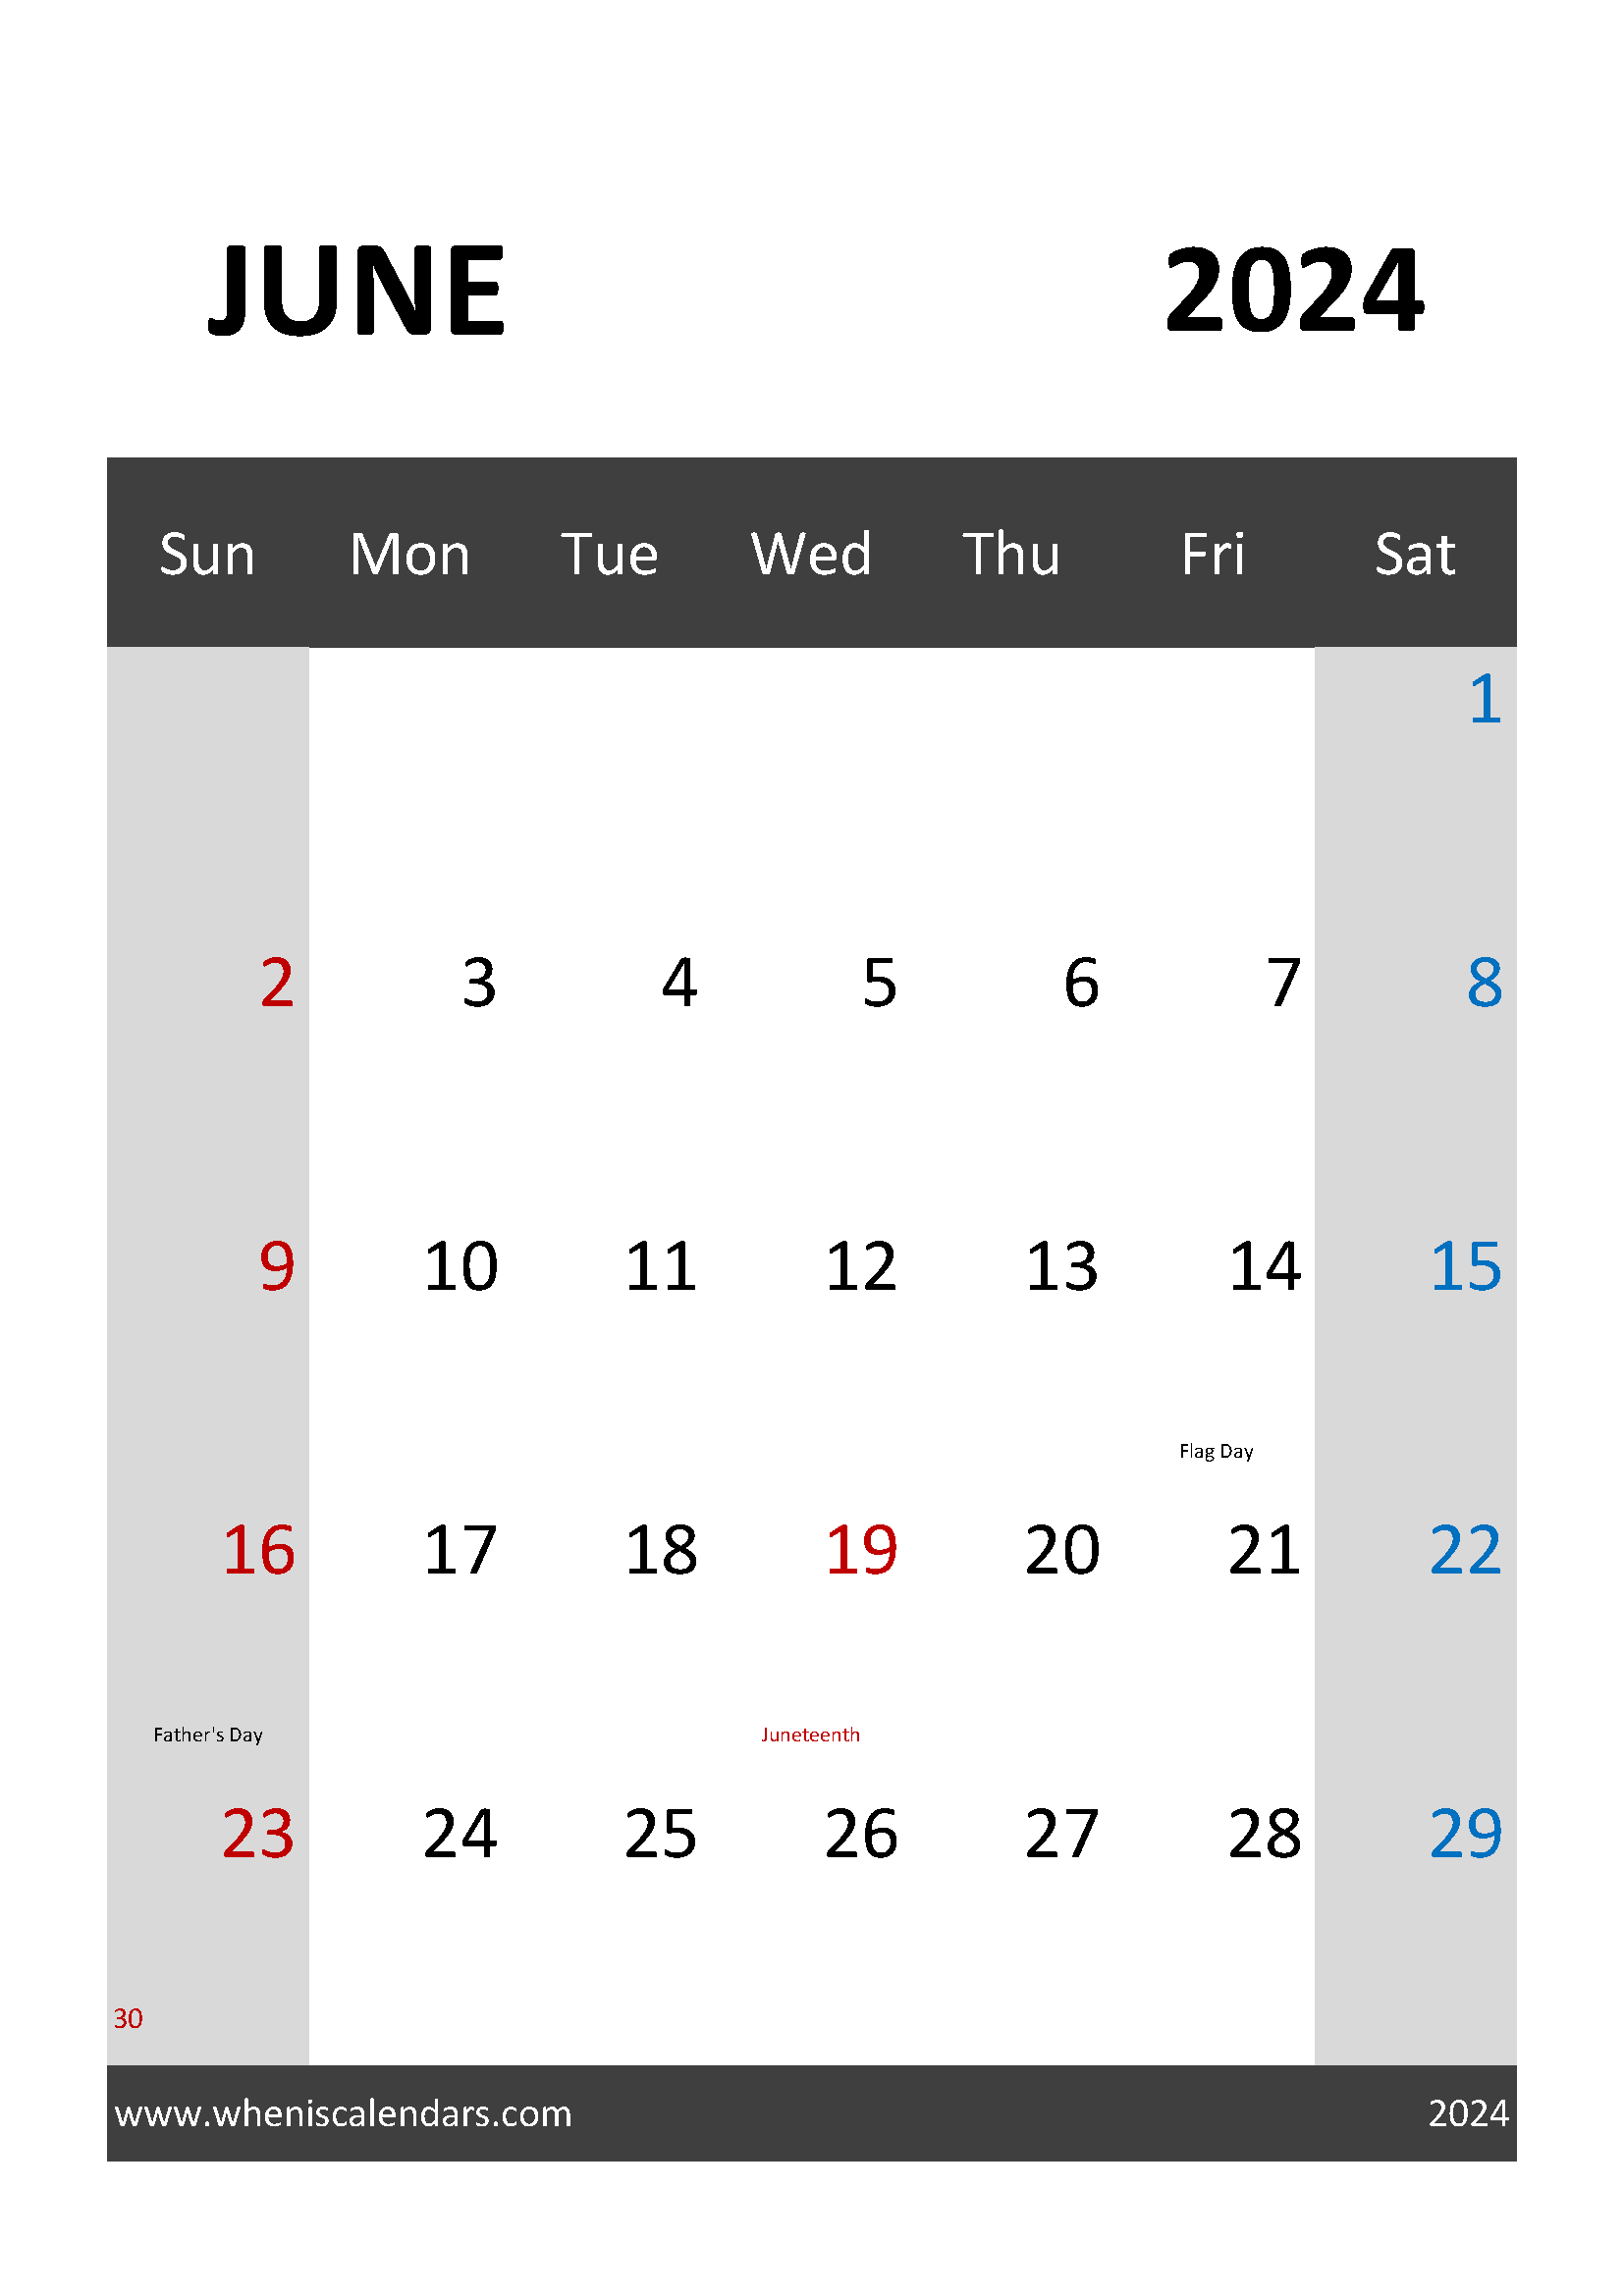 June 2024 Calendar planner Printable Monthly Calendar